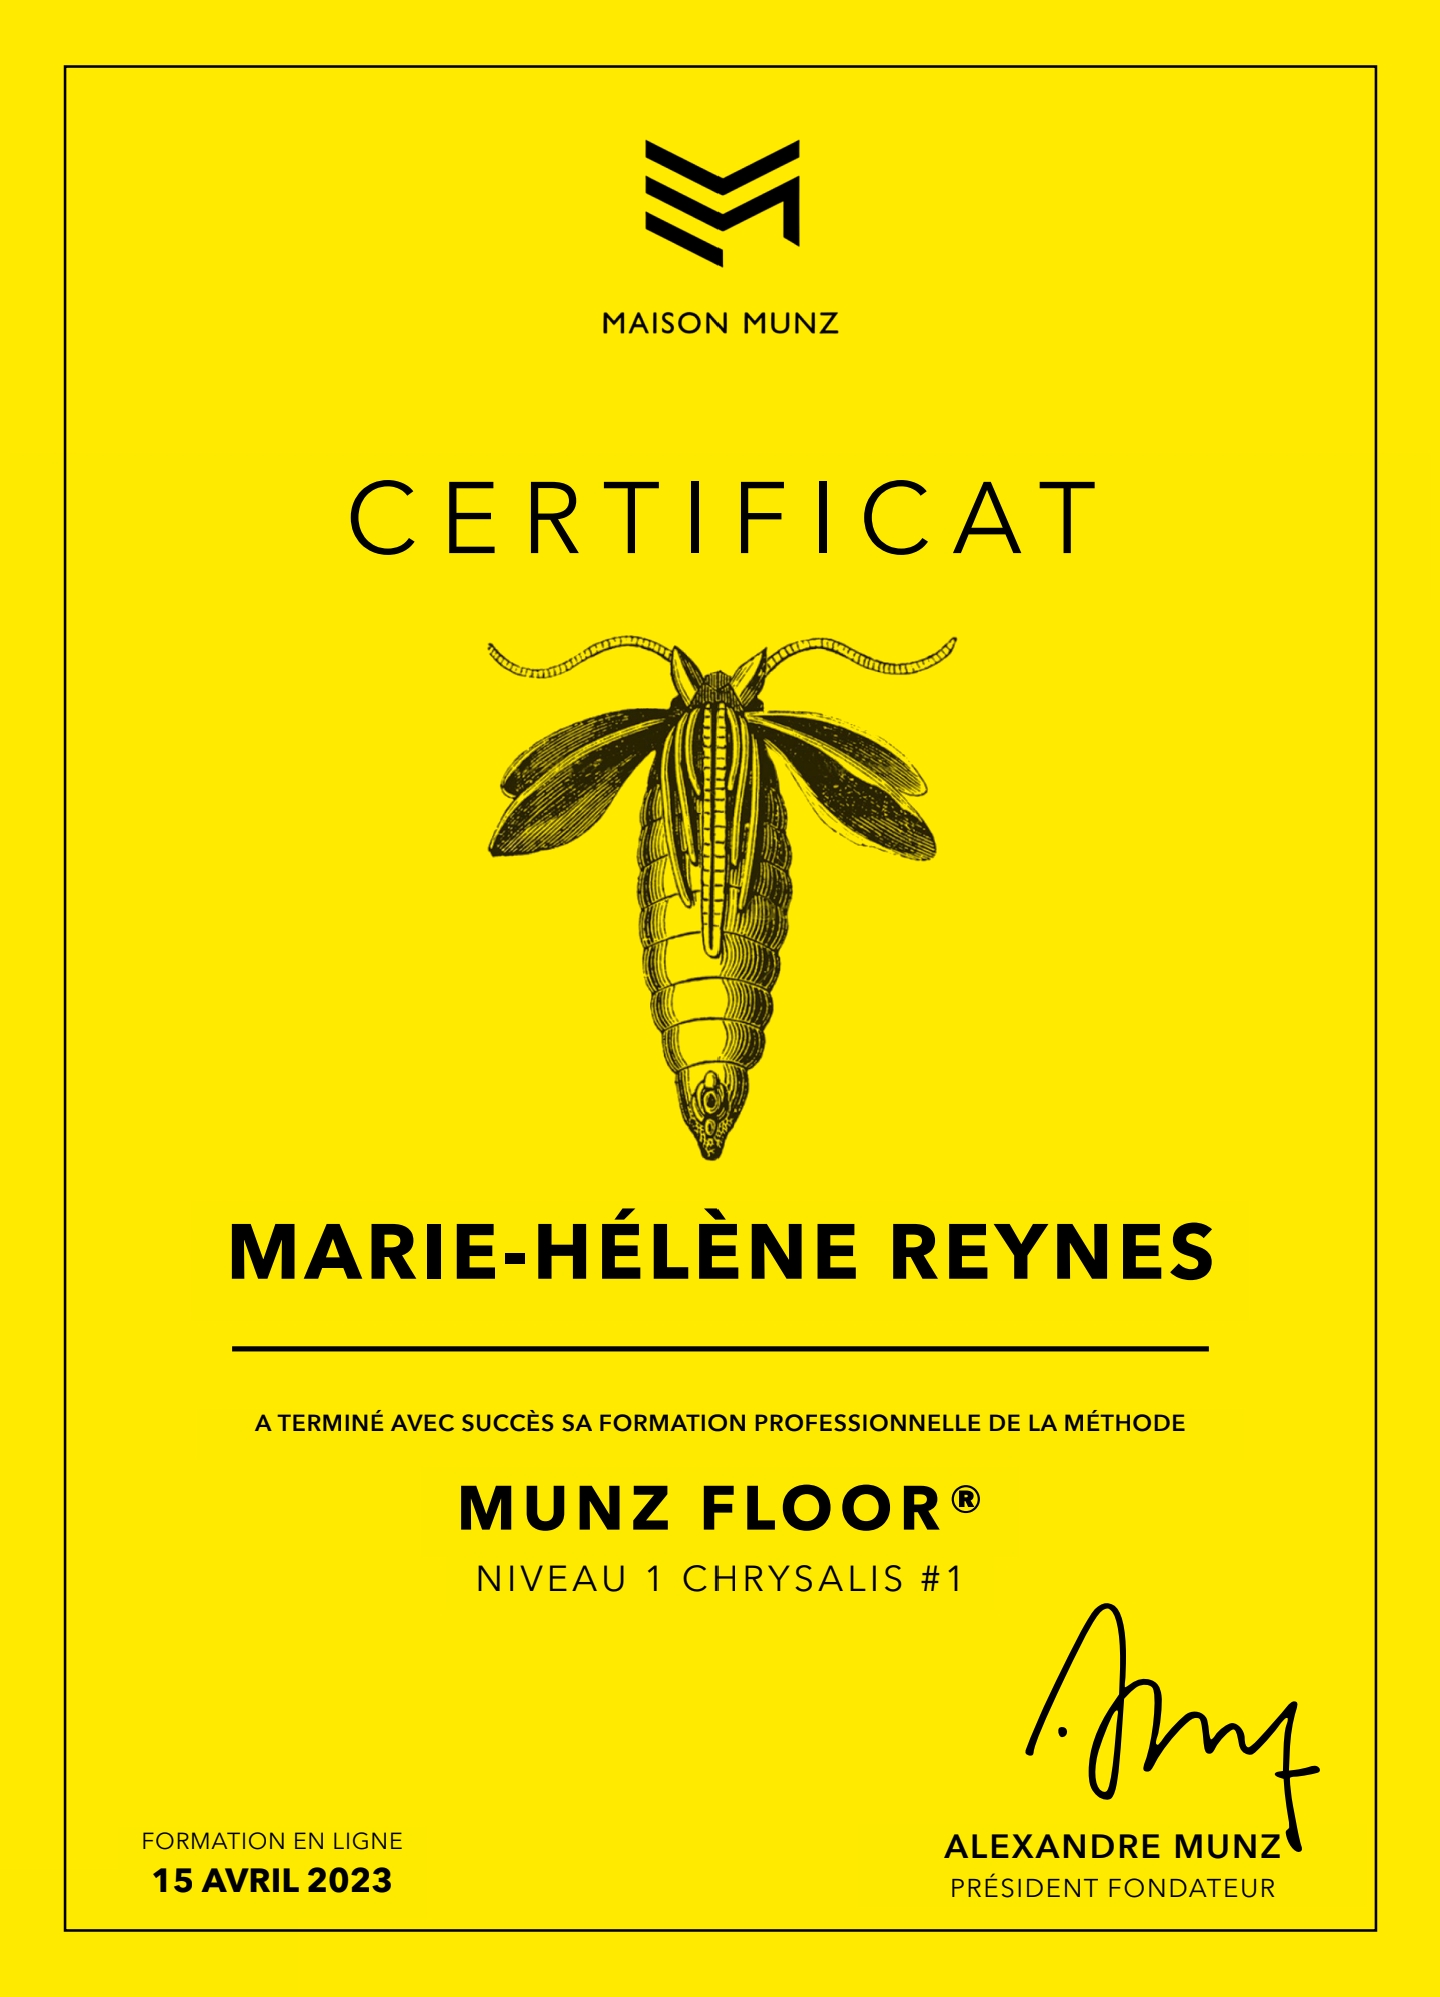 Pilates sur son 31 : certificat_Munz_Floor